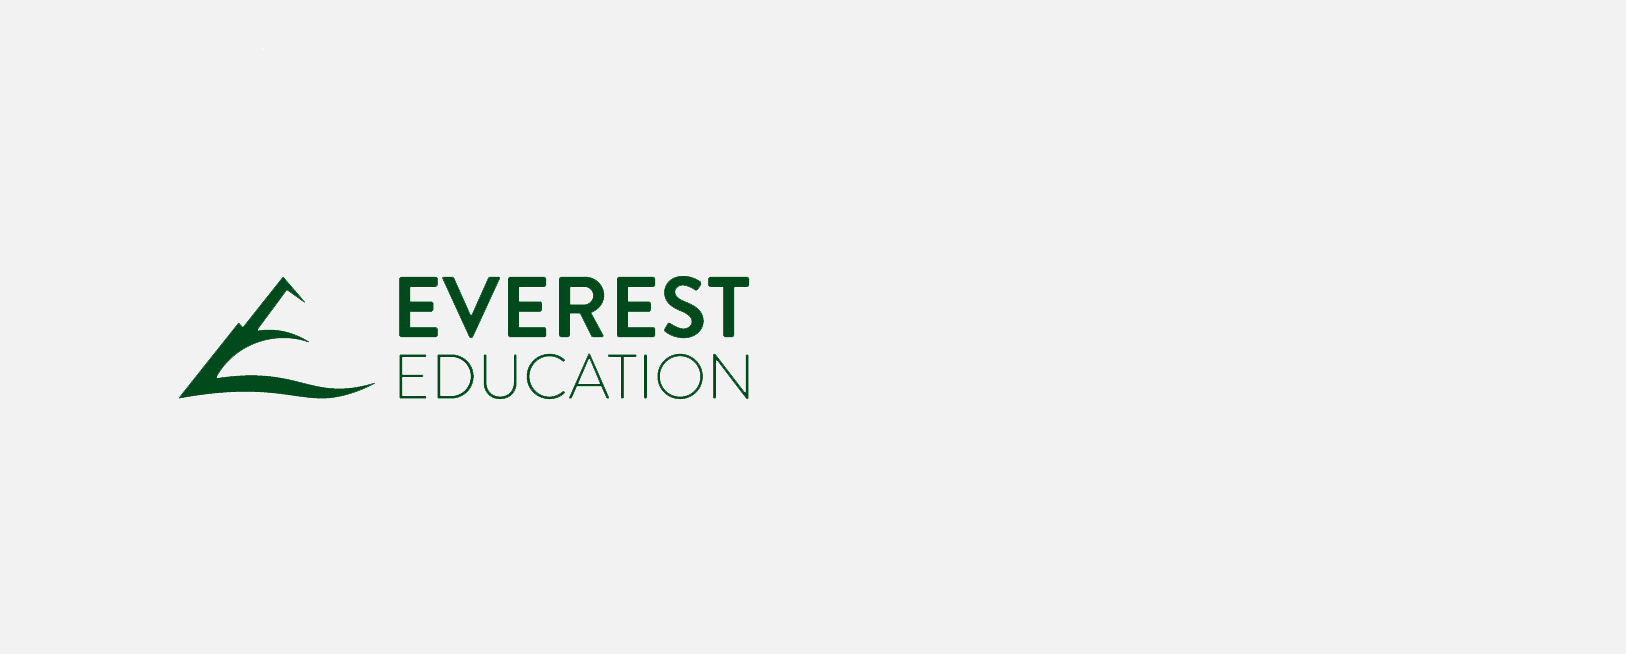 everest education - pc